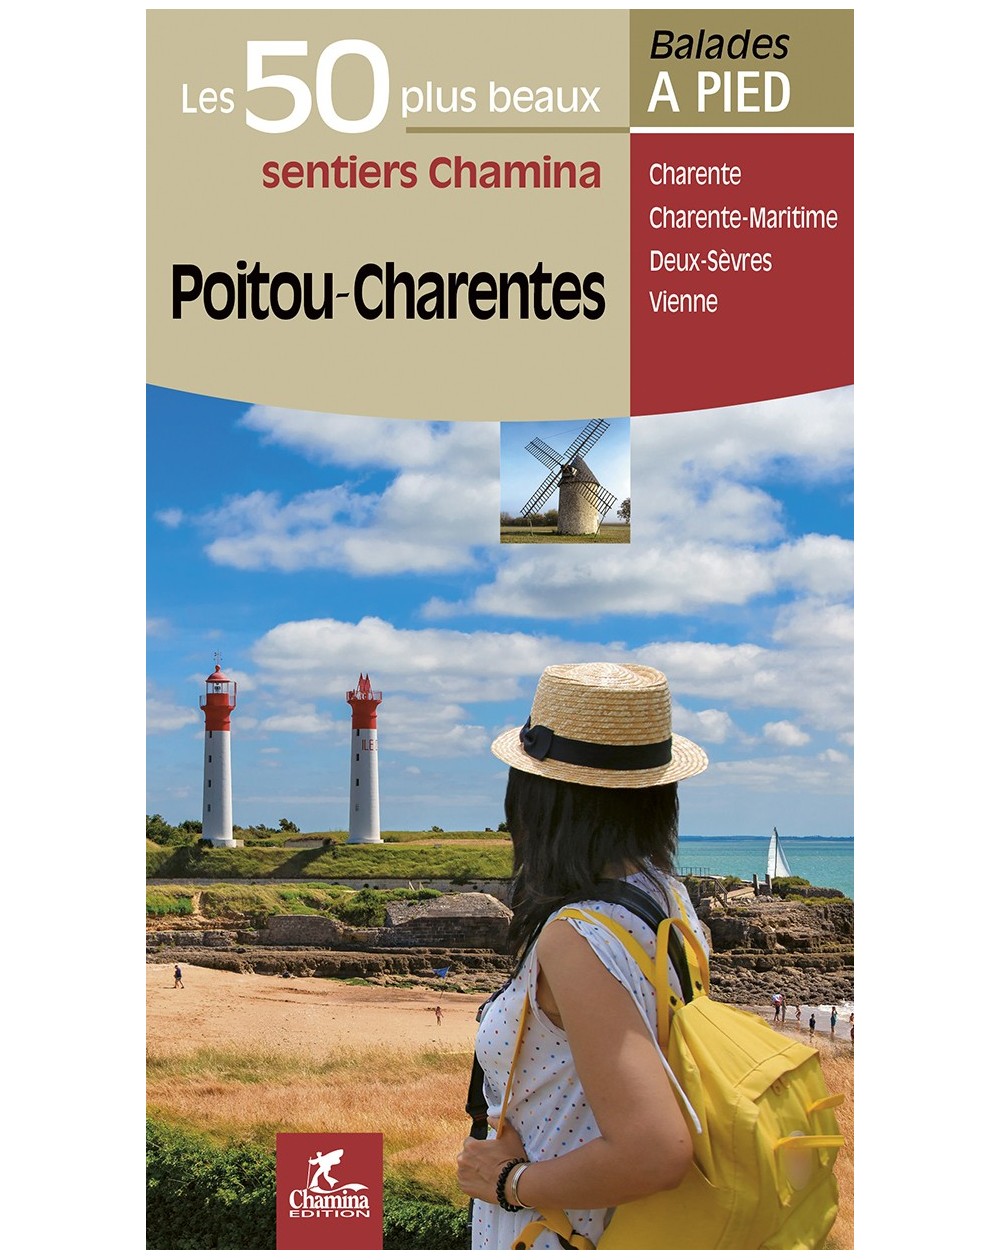 50-balades-poitou-charentes-chamina-edition-9782844664495